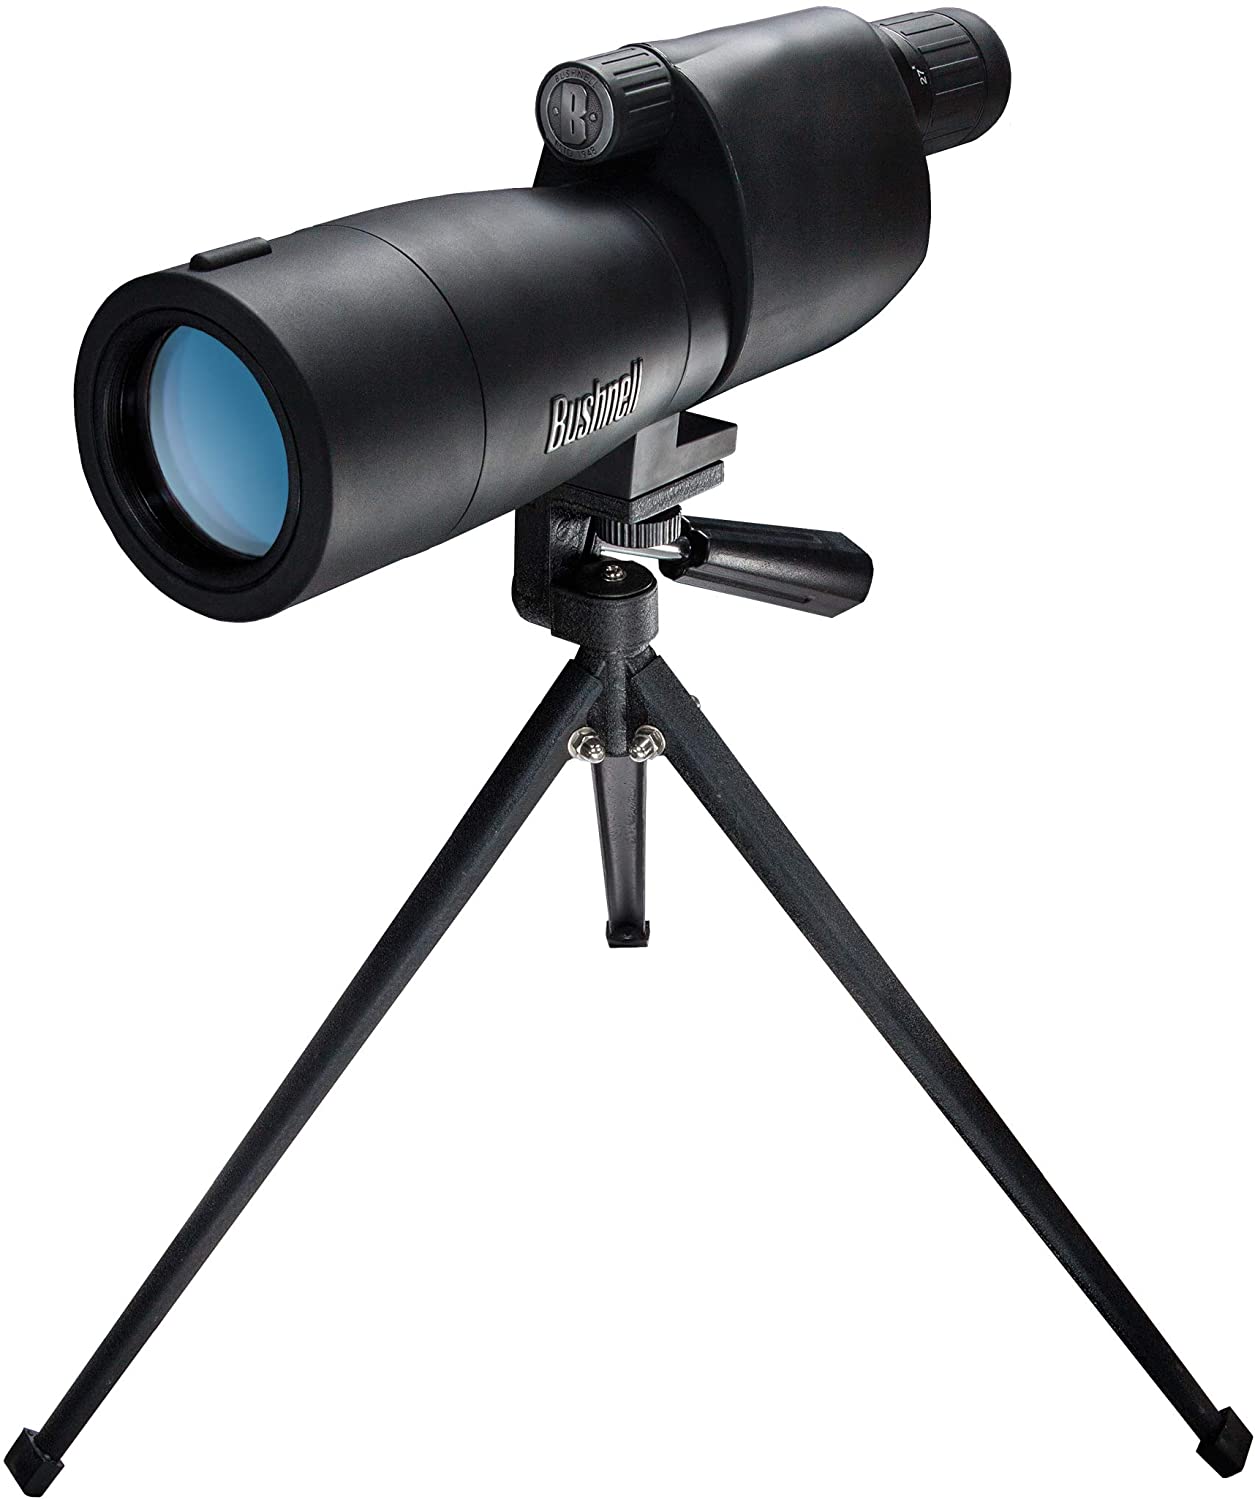 Best spotting scope 